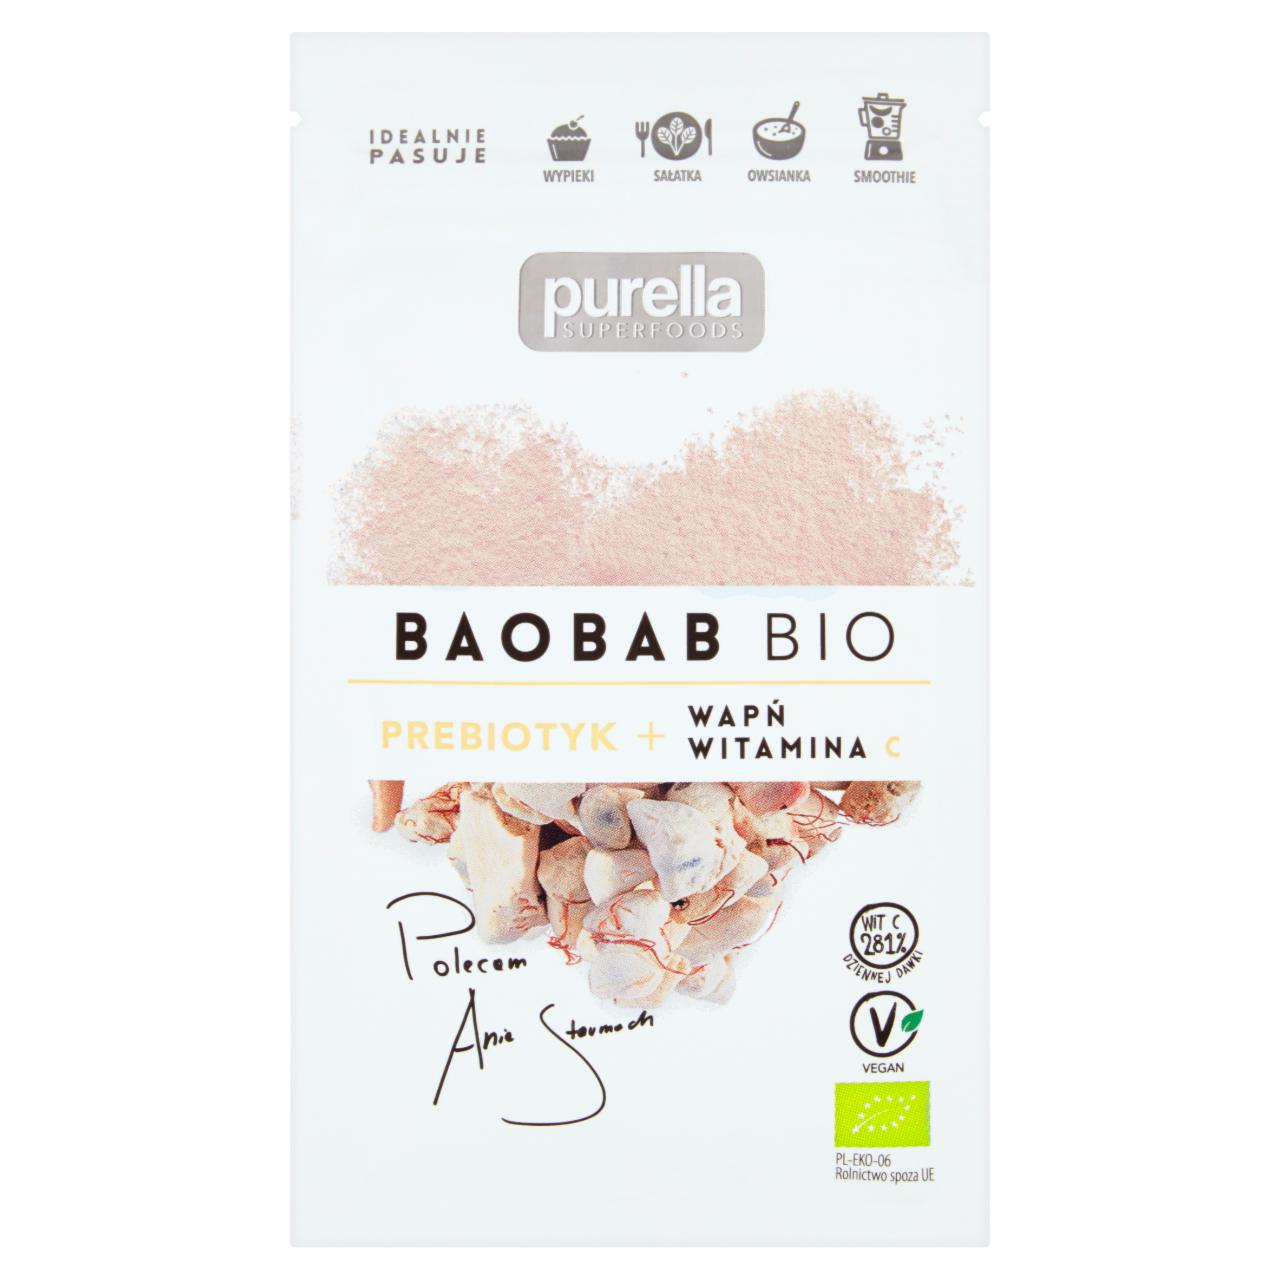 Zdjęcia - Baobab Bio Purella Superfoods